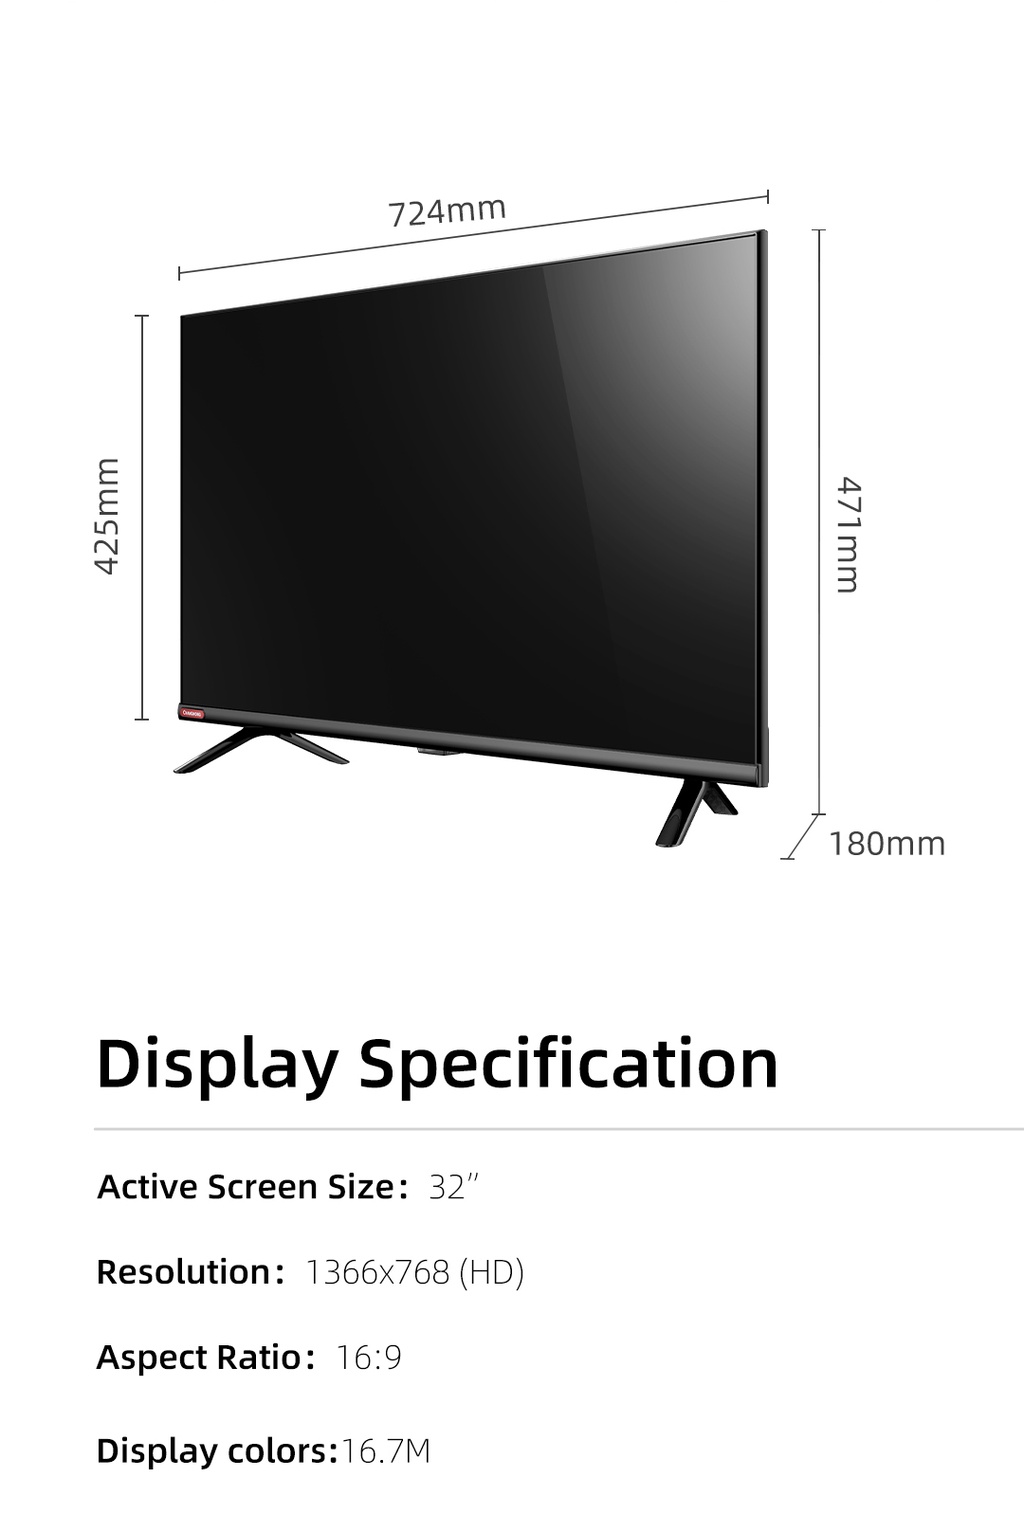 CHANGHONG LCD32G7NA9 TV 32 pollici HDR nuovo decoder DVBT2/S2/C